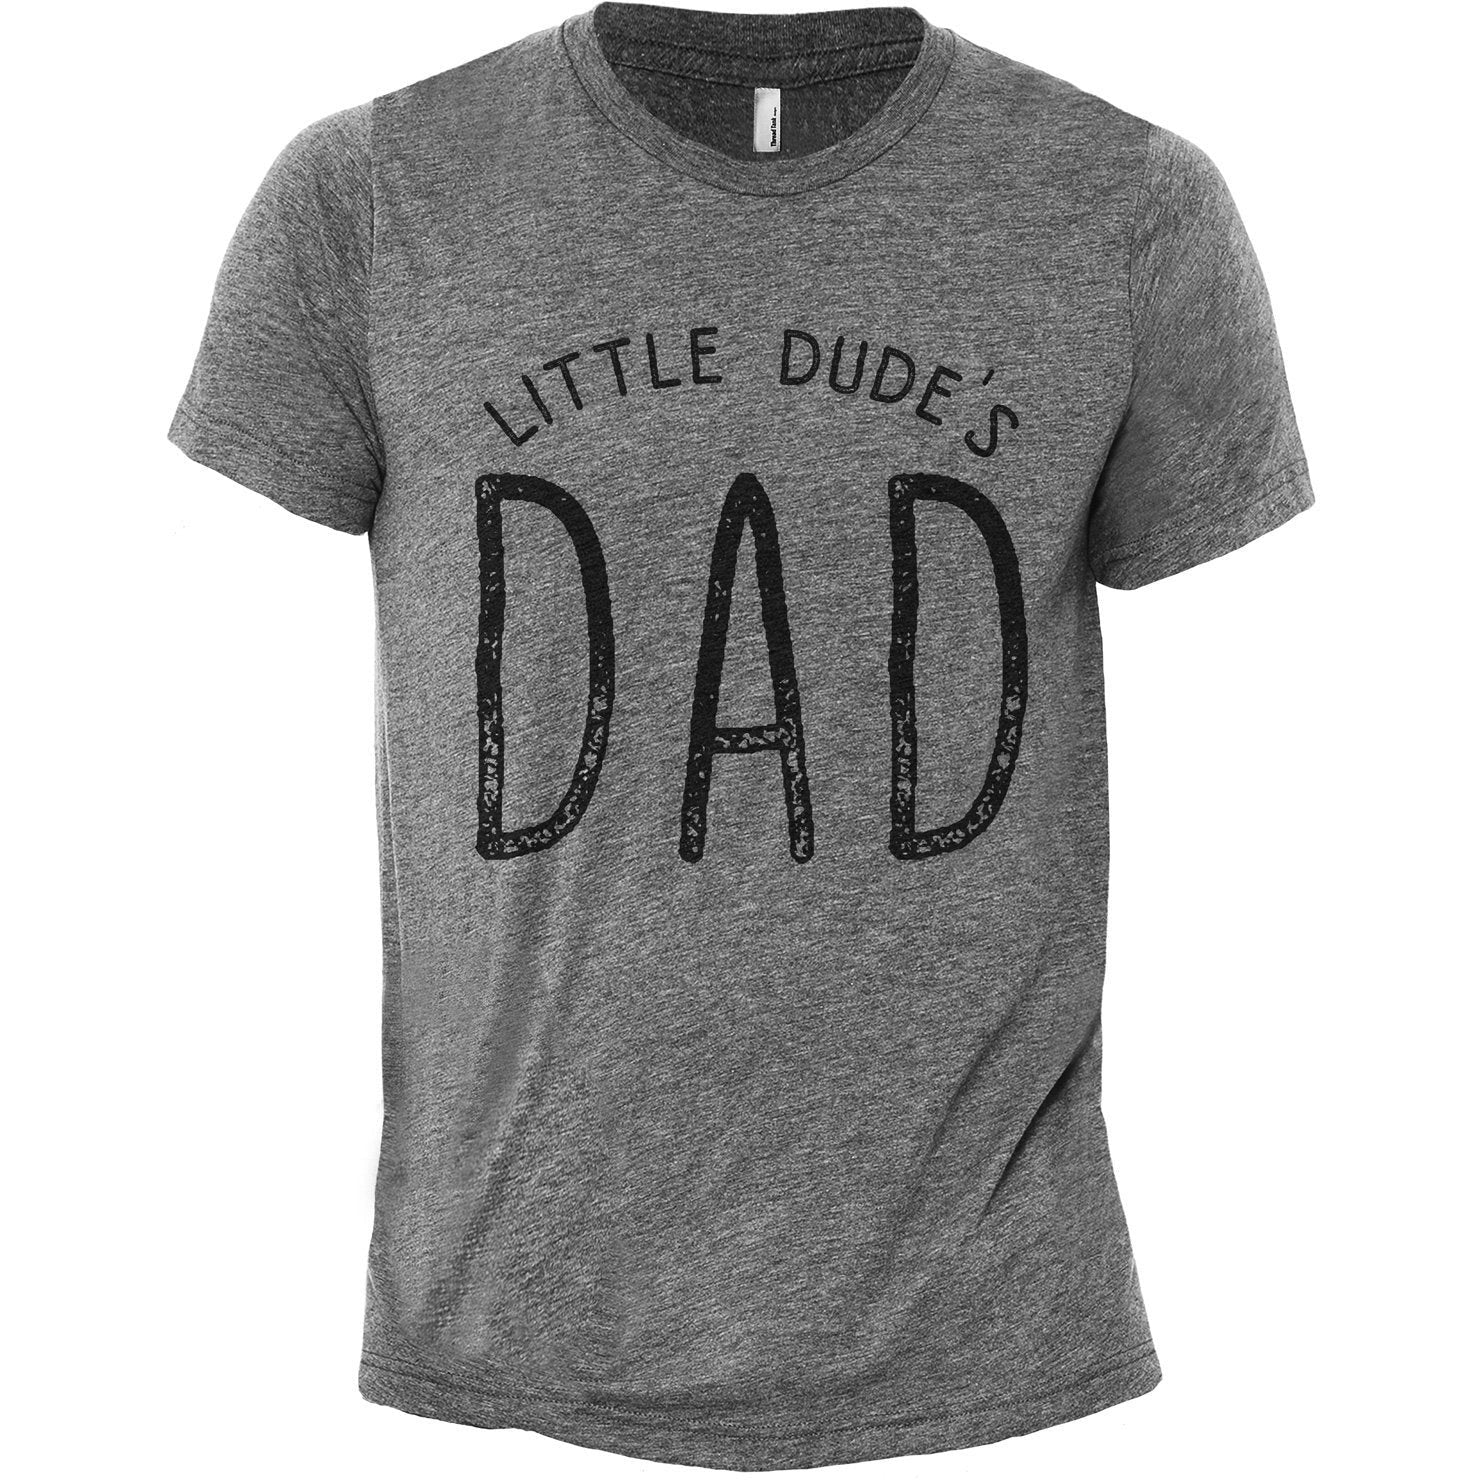 Lil Dude's Dad Heather Grey Printed Graphic Men's Crew T-Shirt Tee